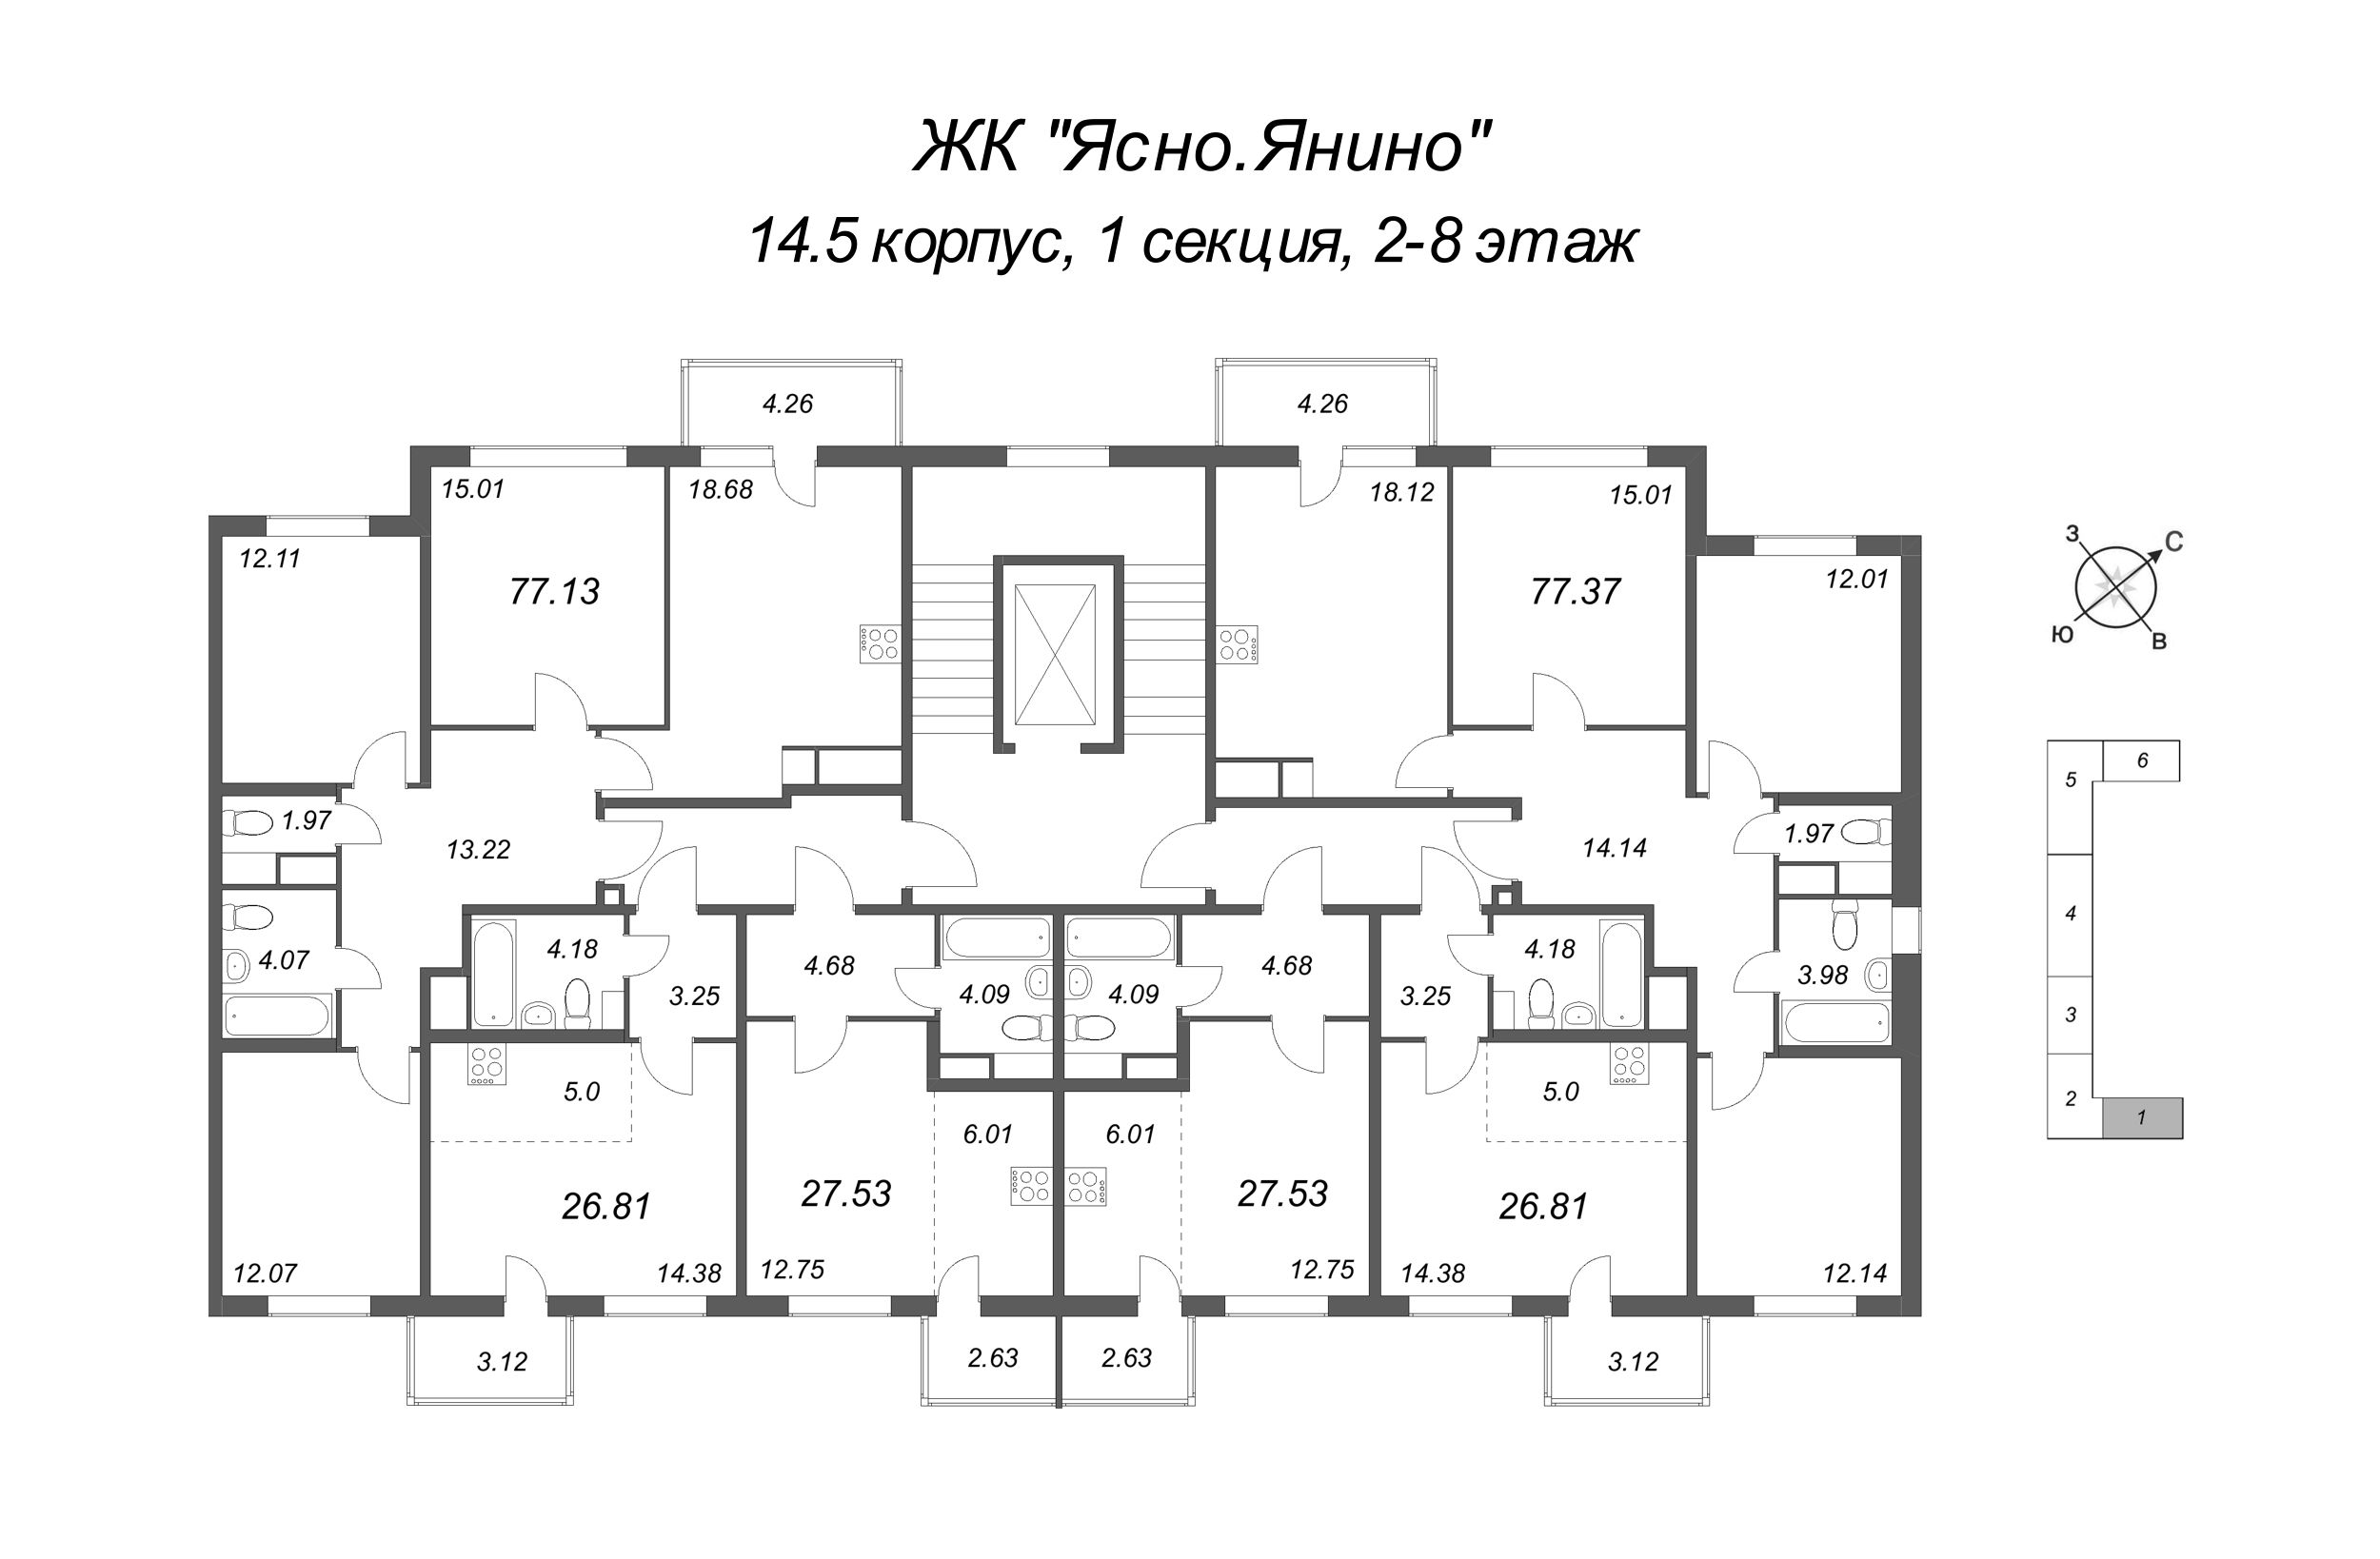 4-комнатная (Евро) квартира, 77.13 м² - планировка этажа